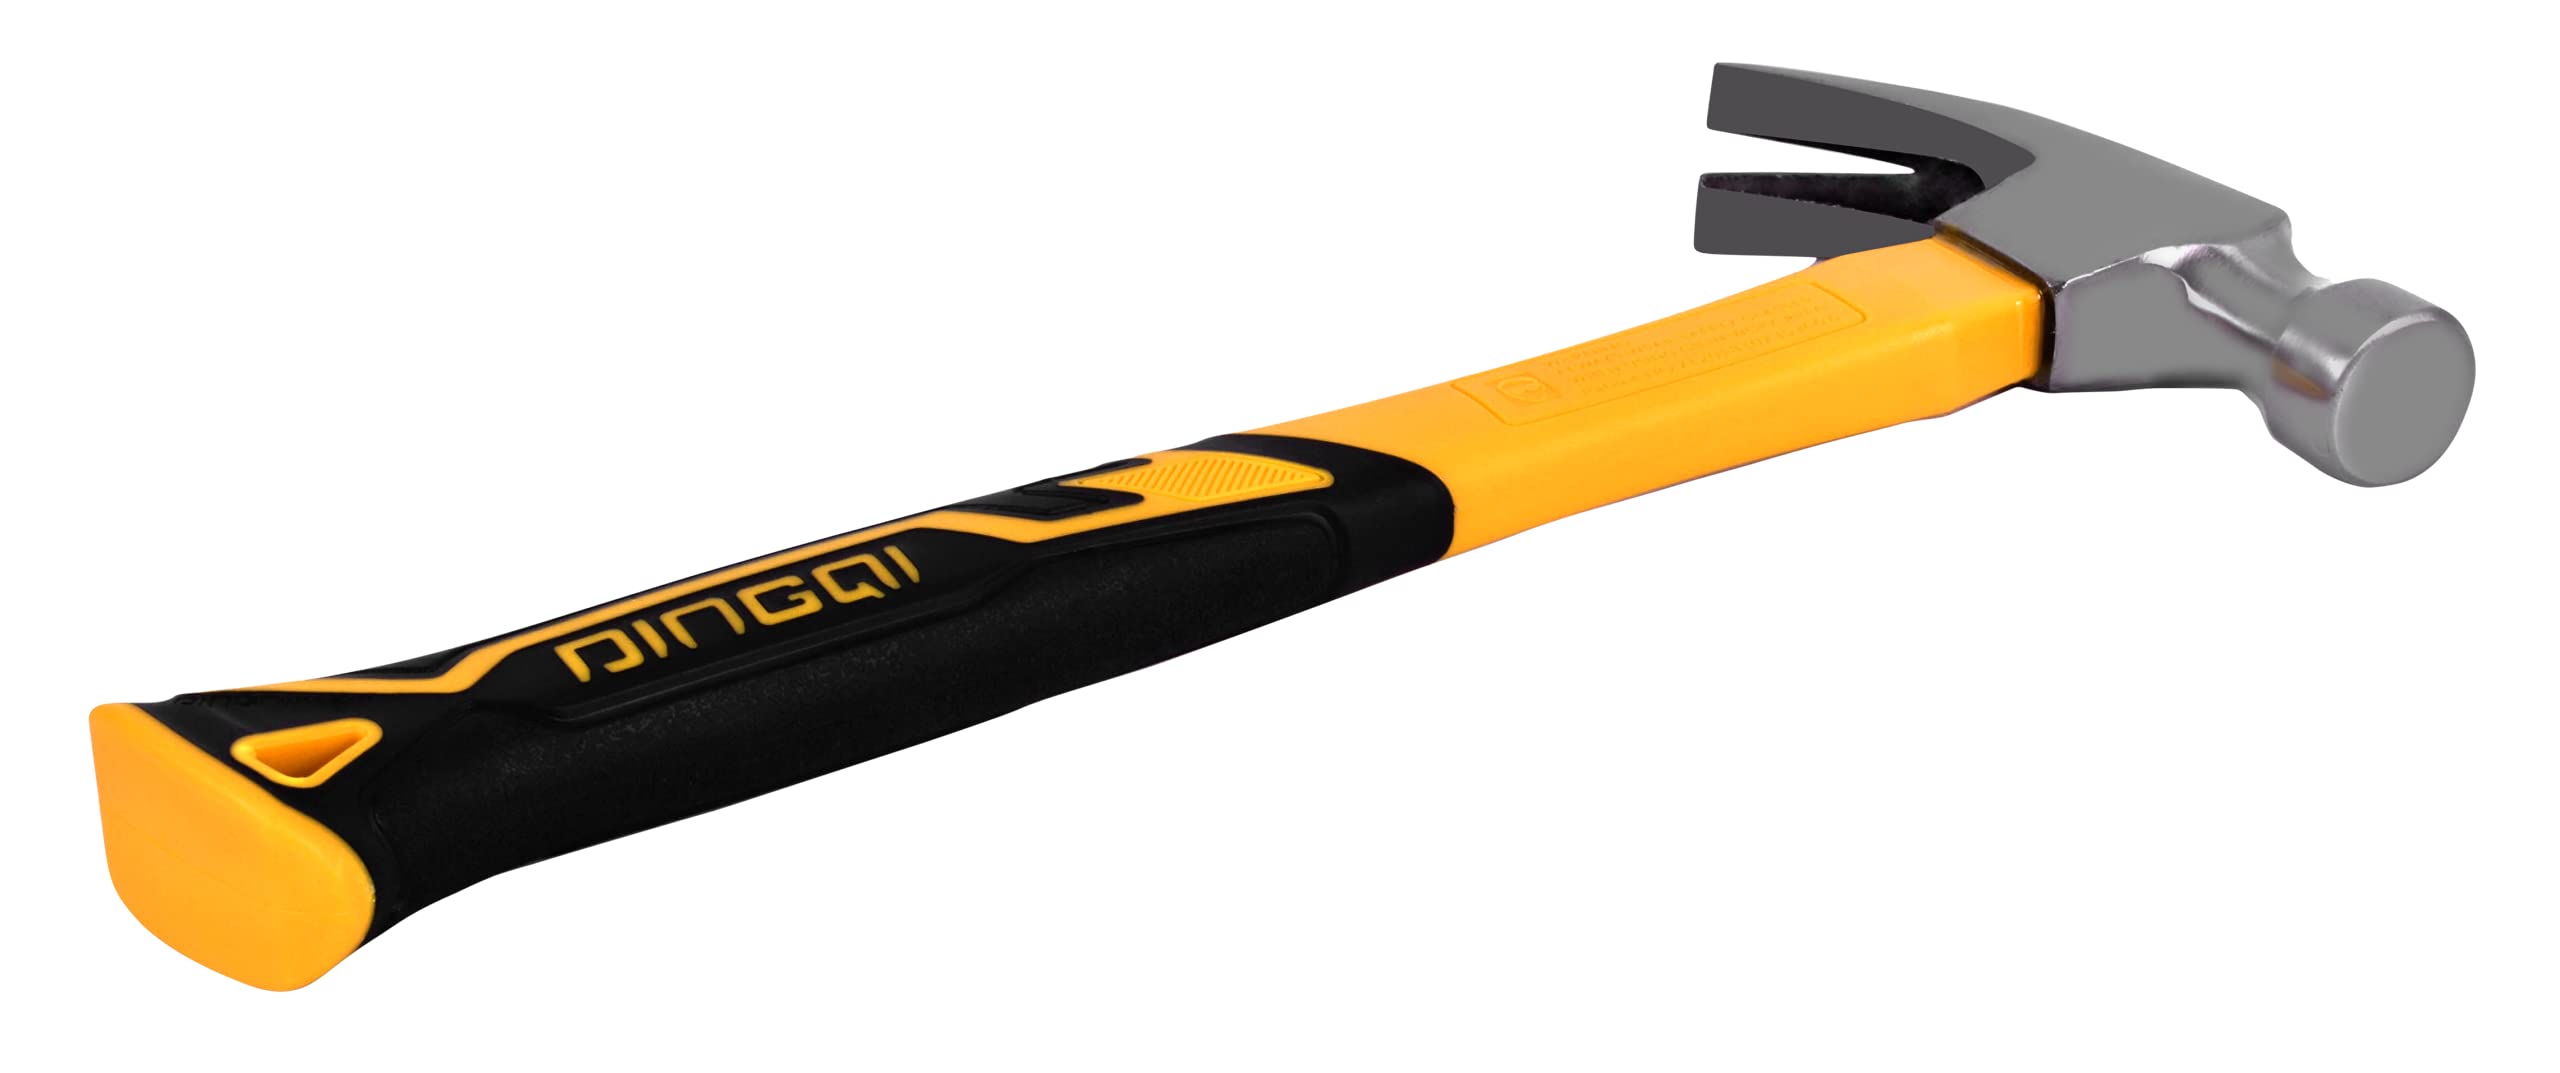 Dingqi Claw Hammer with Shock Reduction Grip Handle for Repair Men/Contractors and Automotive Mechanics Comfort Grip Handle - 8oz